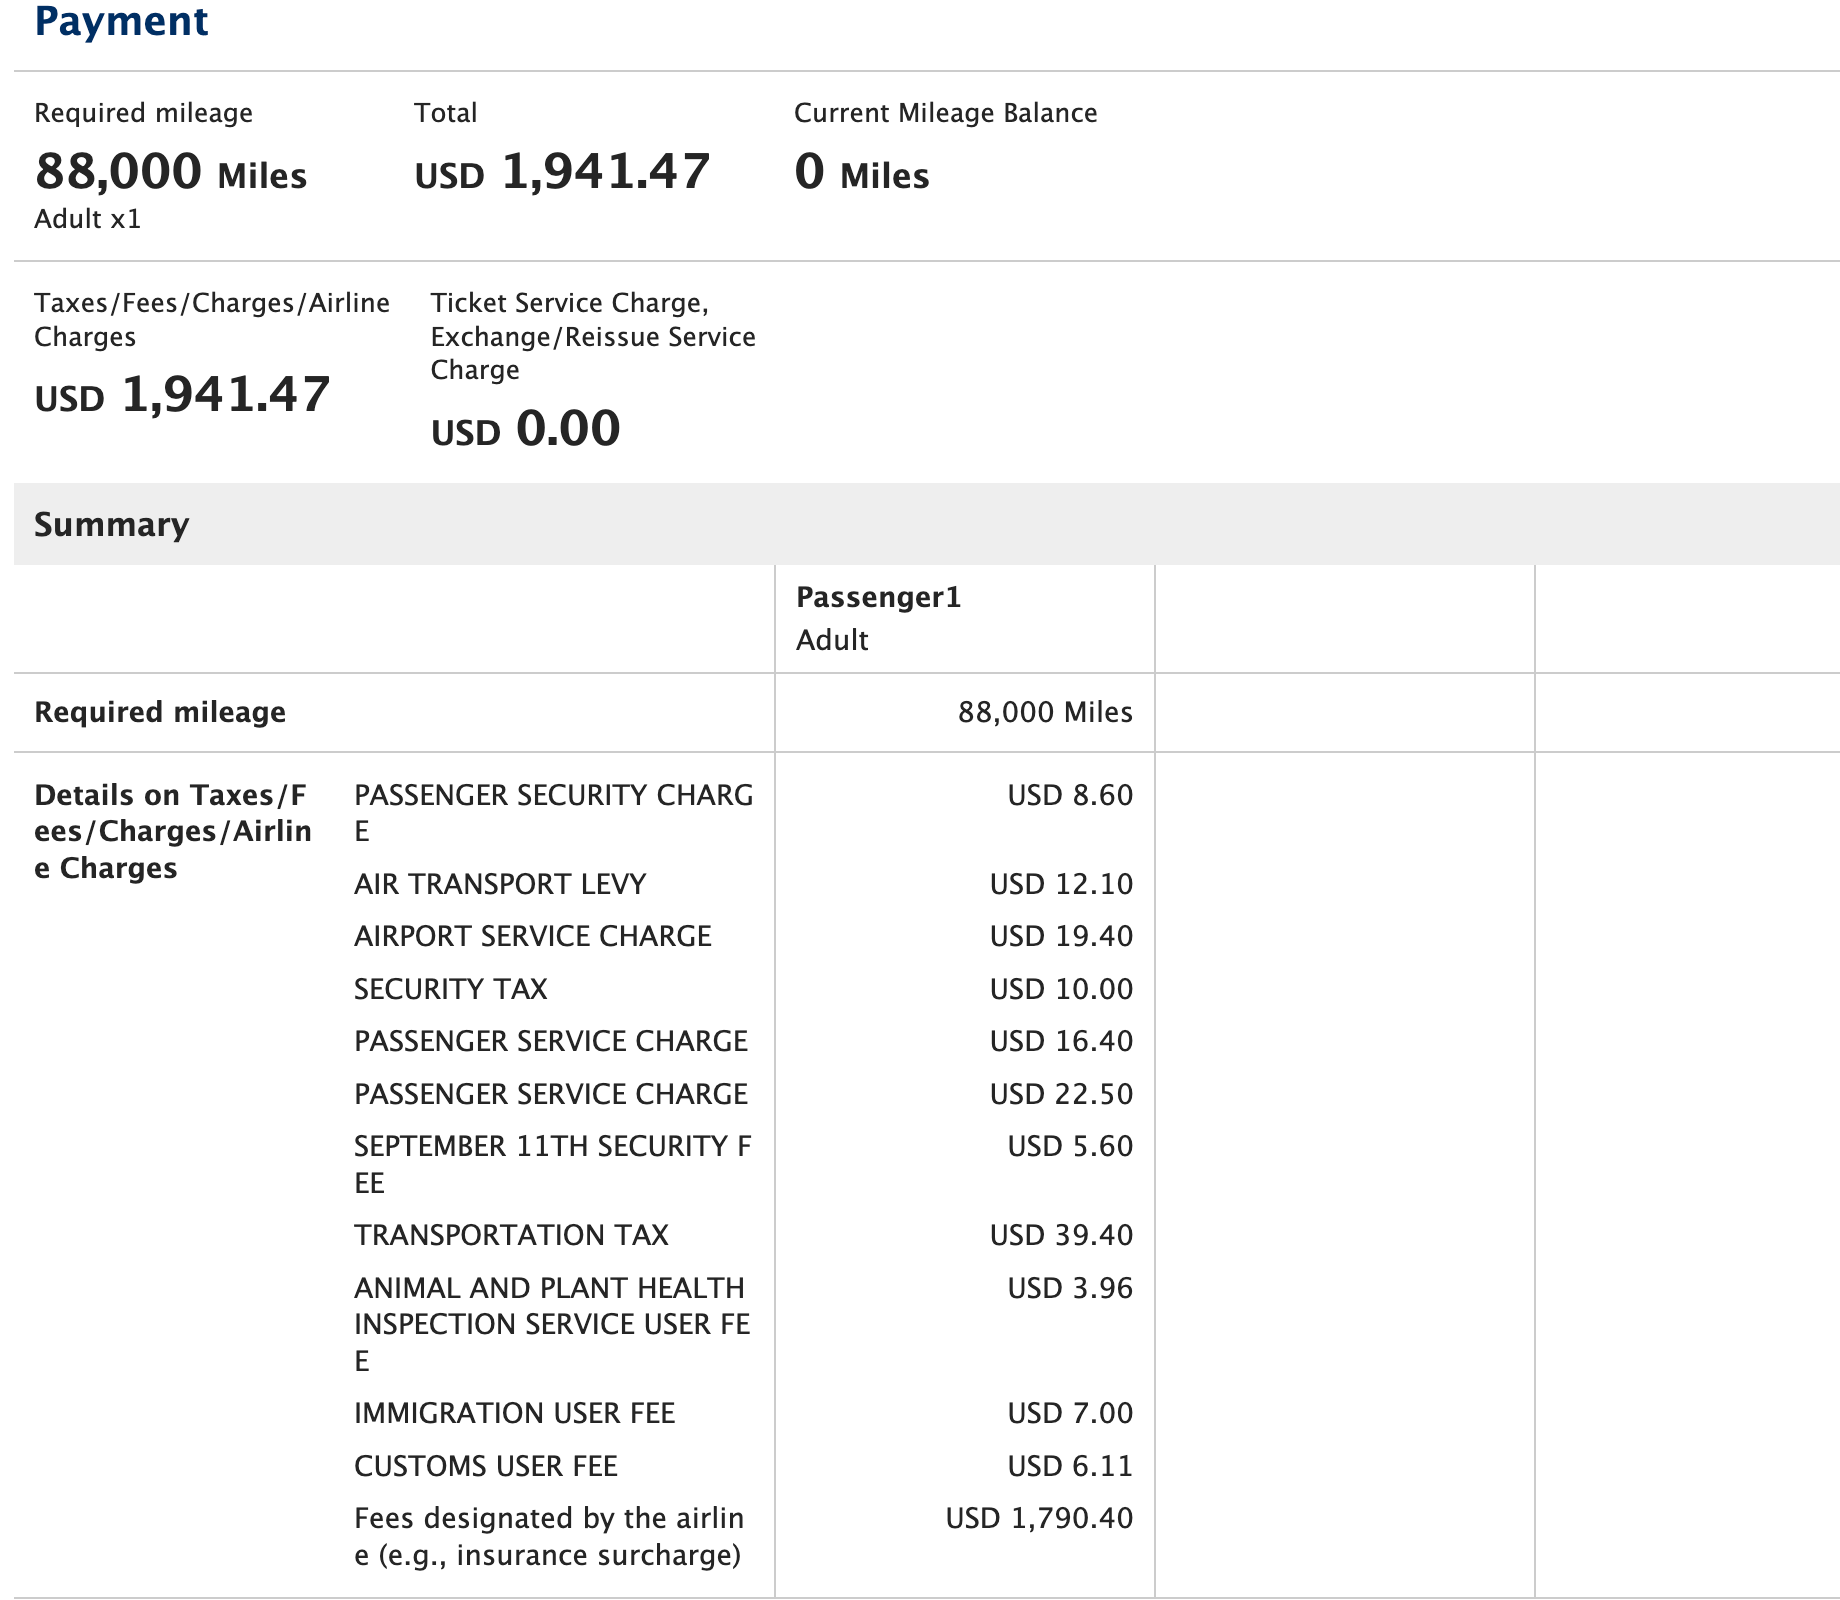 Screenshot of award booking availability JFK-VIE by ANA